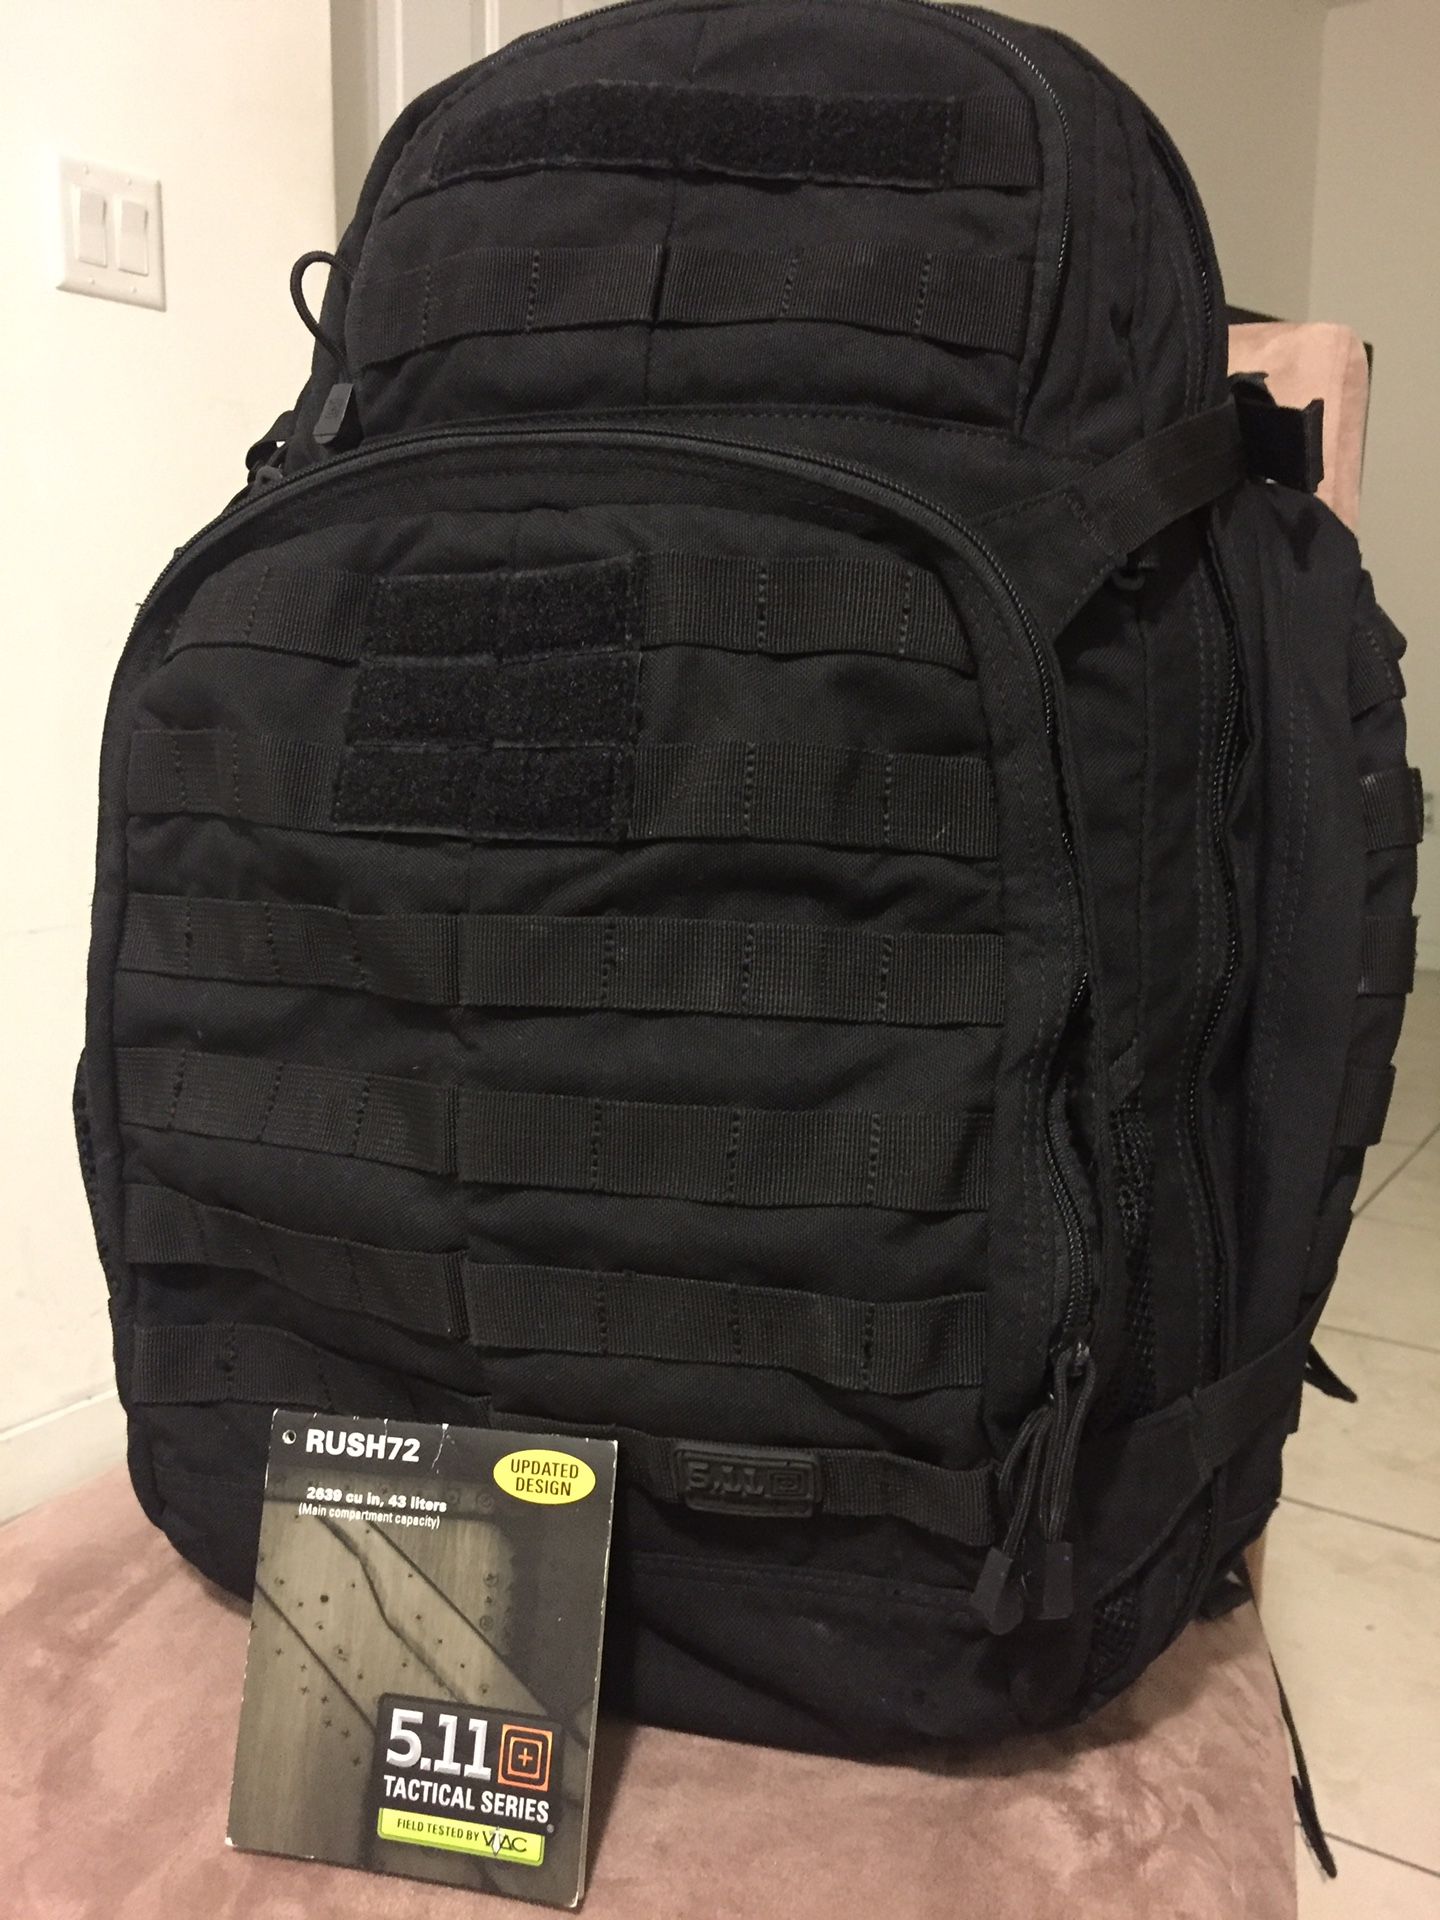 5.11 Rush72 backpack